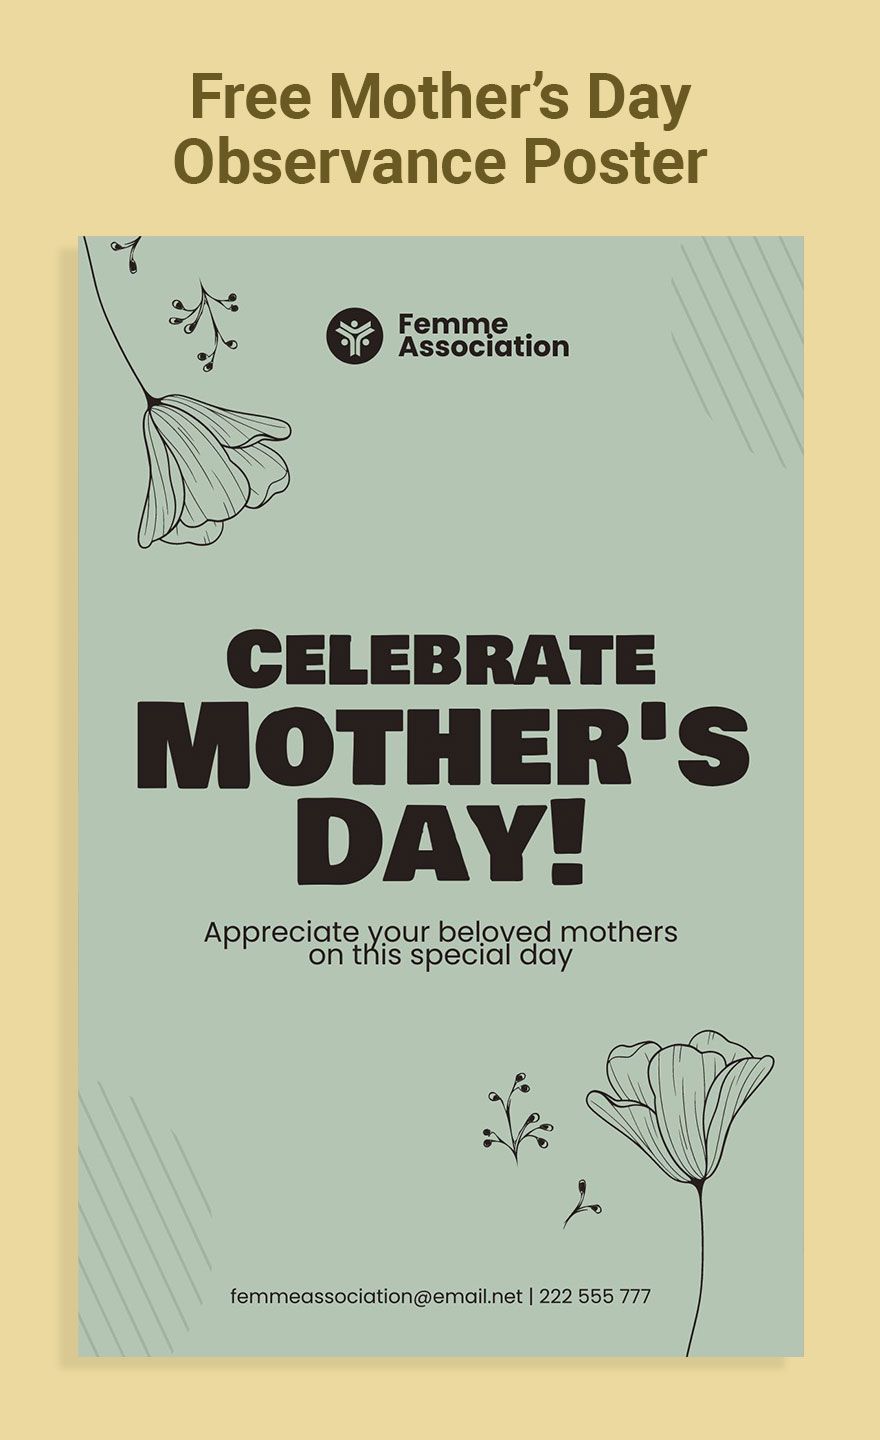 Mother's Day Observance Poster in Word, Google Docs, Illustrator, PSD, EPS, SVG, JPG, PNG